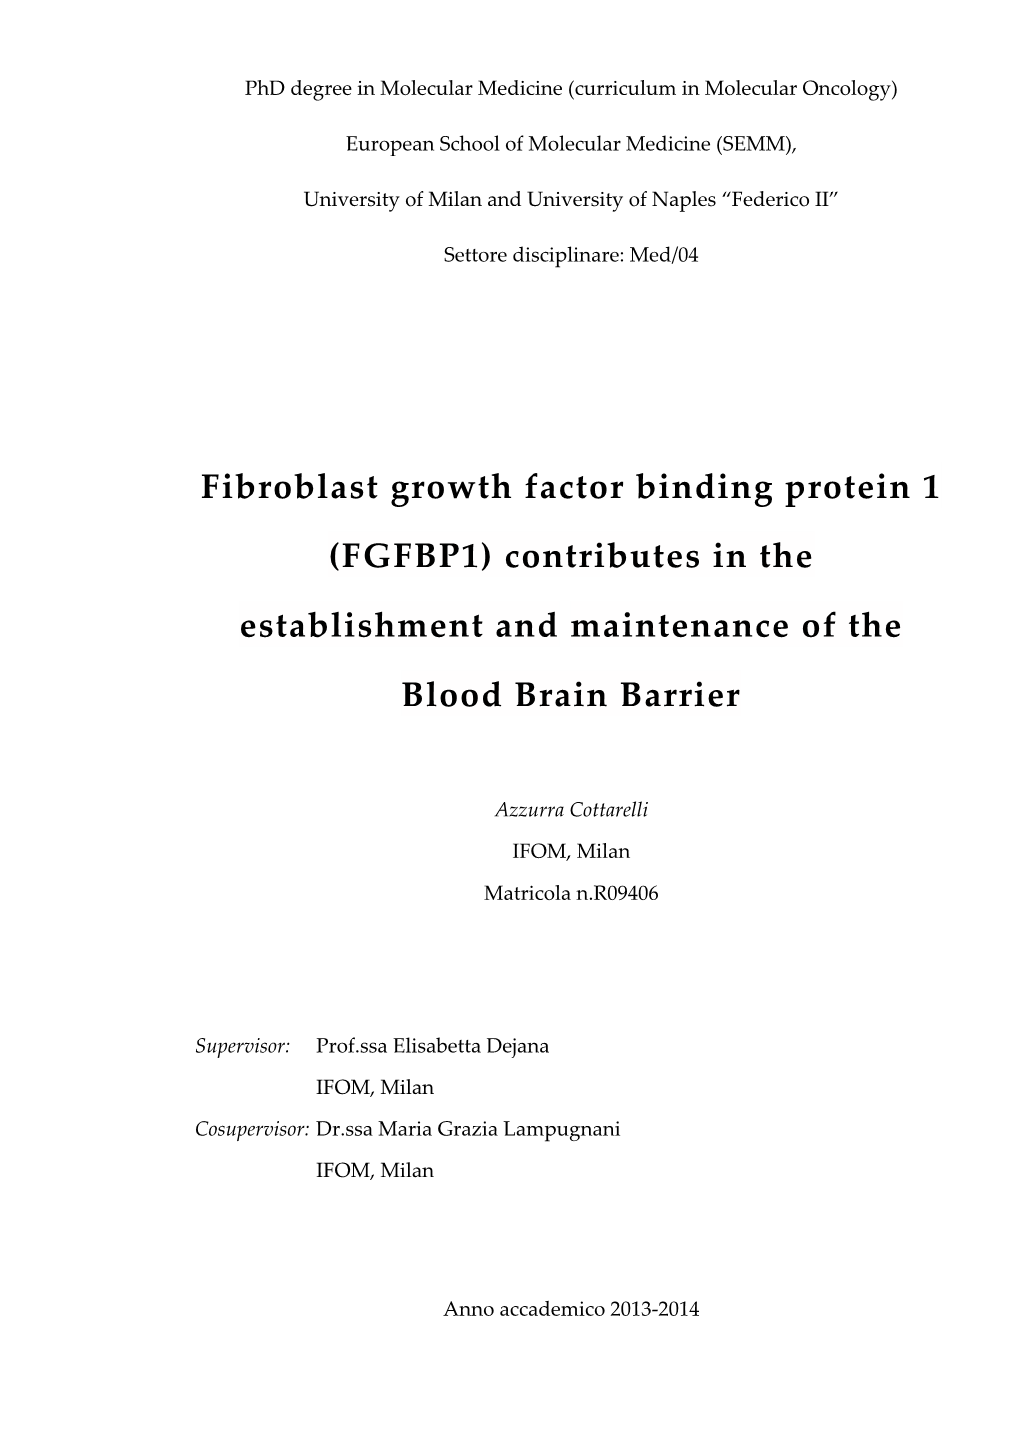 Fibroblast Growth Factor Binding Protein 1 (FGFBP1)